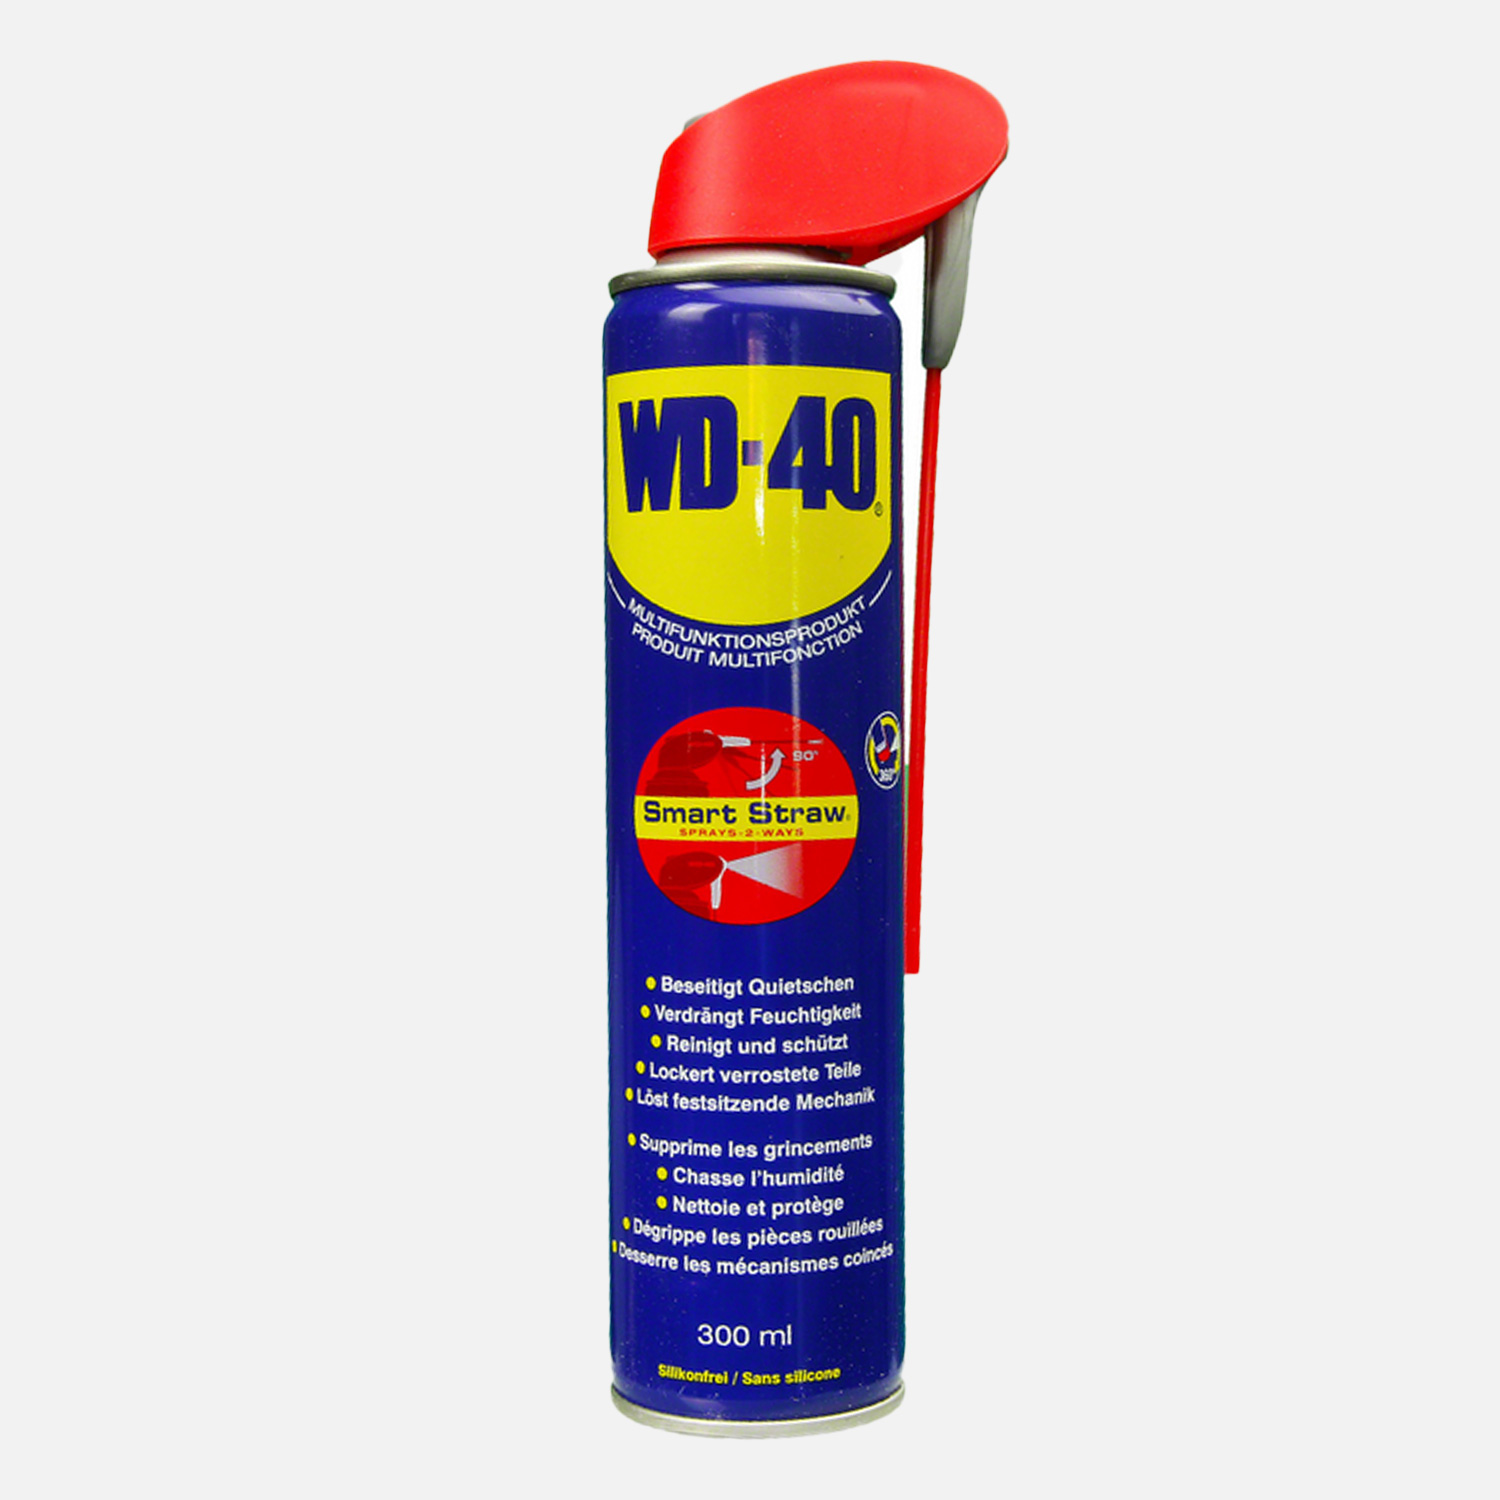 300 ml WD-40 Smart Straw Slim - Multifunktionsspray, Kriechöl, Schmieröl